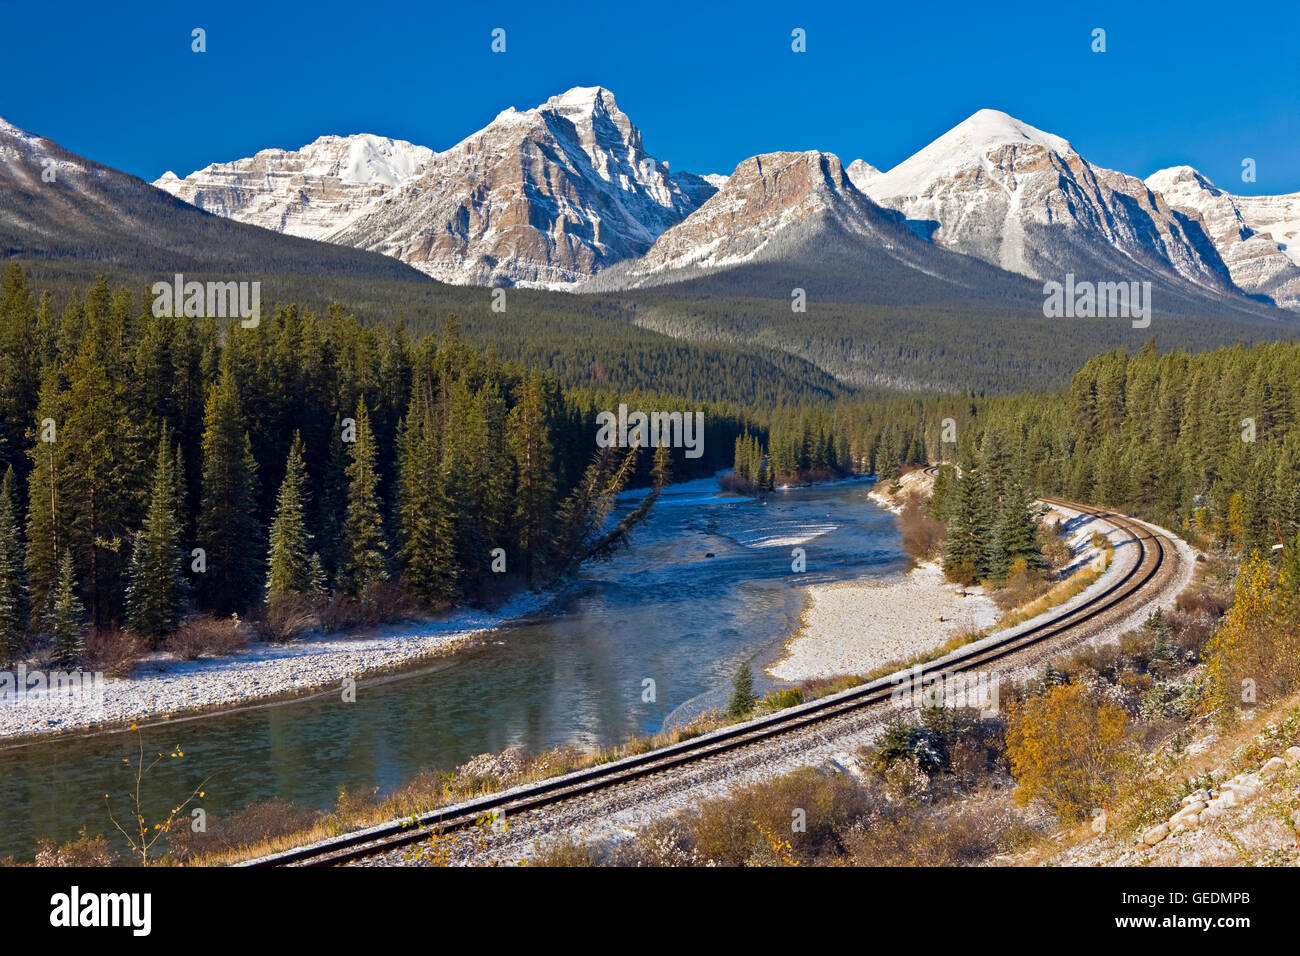 Geographie / Reisen, Kanada, Alberta, Bahngleise Morant Kurve entlang des Bow River, Bow Valley Parkway, Banff Nationalpark, Alberta Banff National Park ist Bestandteil der Canadian Rocky Mountain Parks UNESCO World Heritage Site. Stockfoto